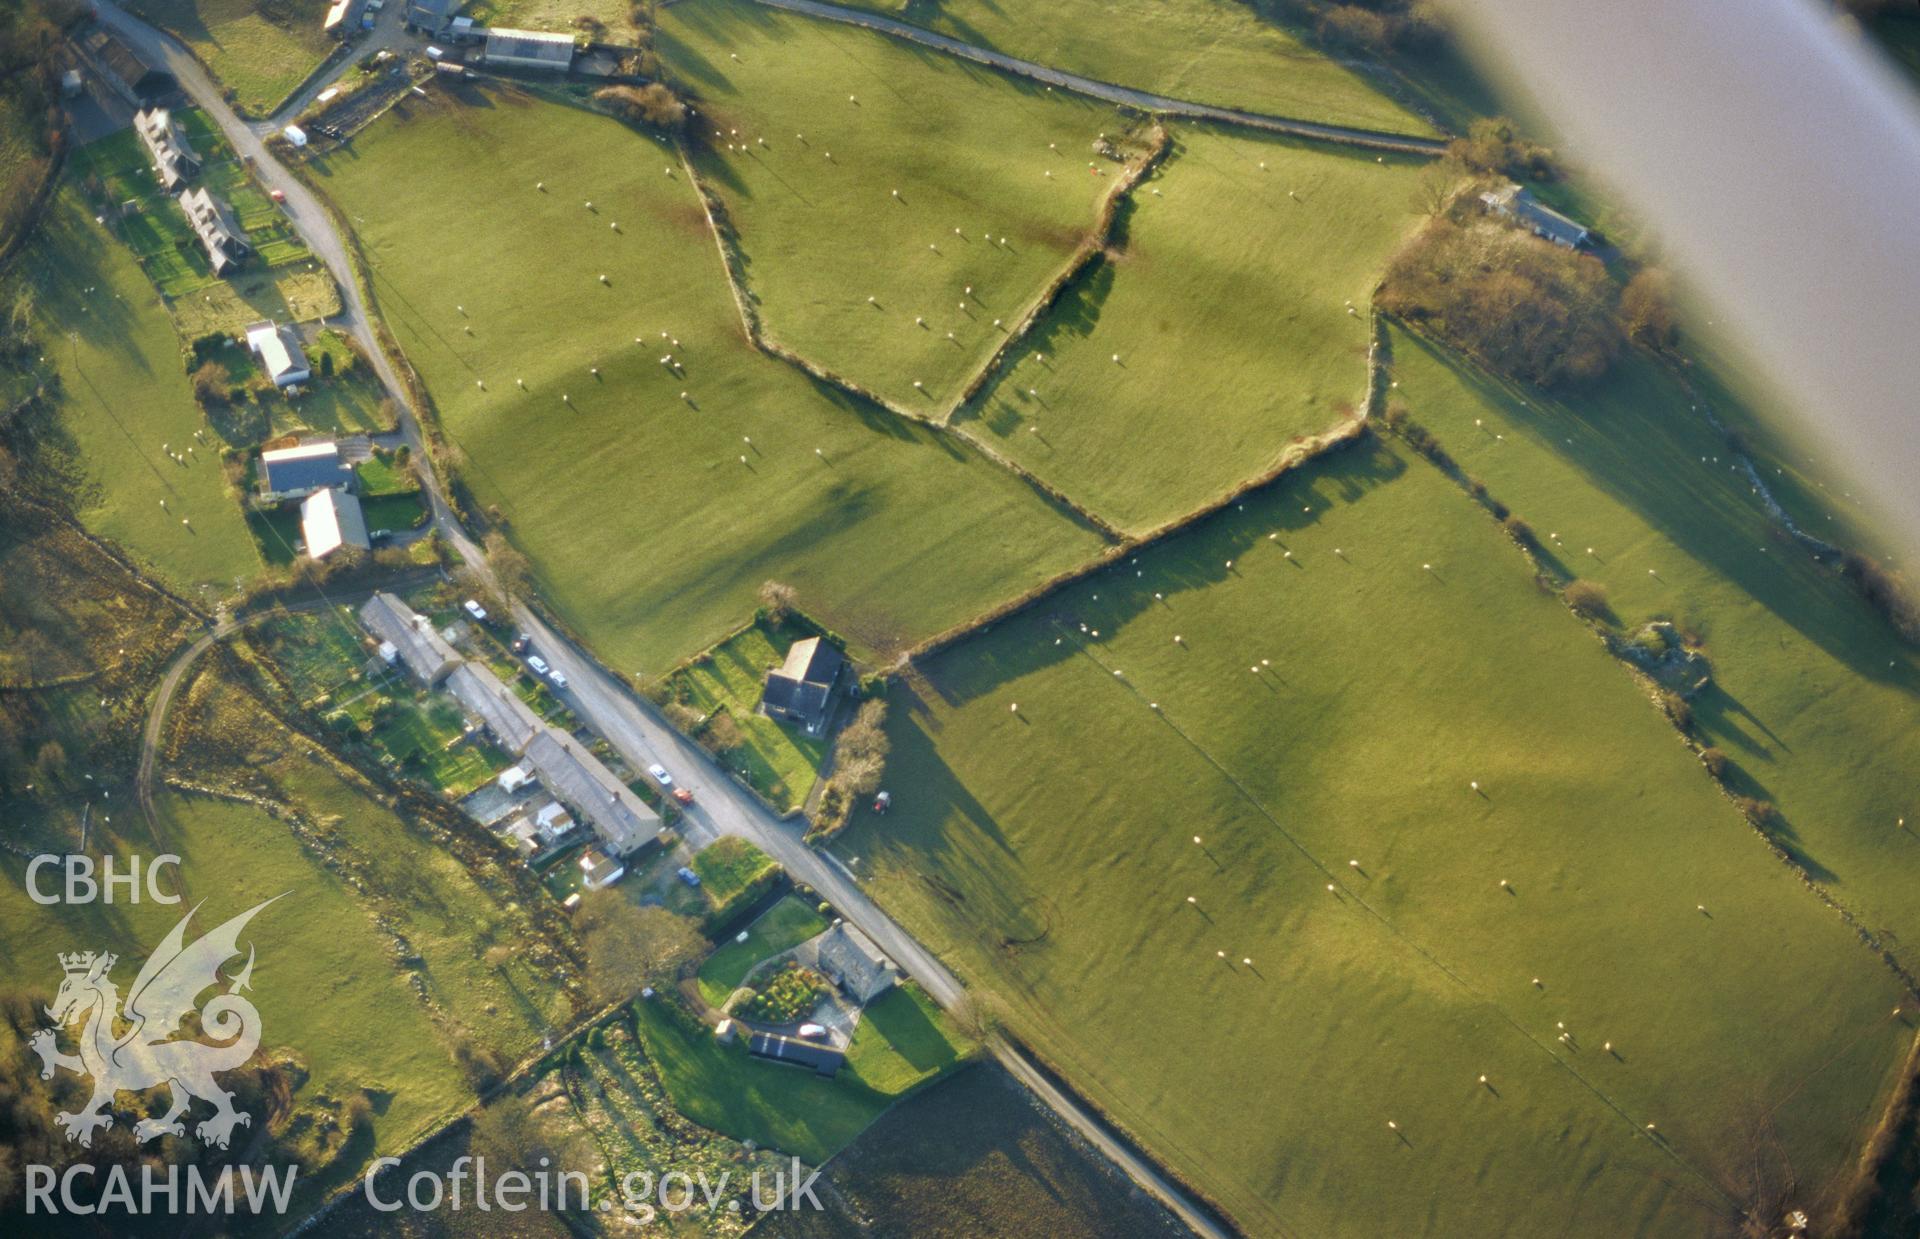 Slide of RCAHMW colour oblique aerial photograph of Brithdir Roman Fort, taken by T.G. Driver, 17/3/1999.